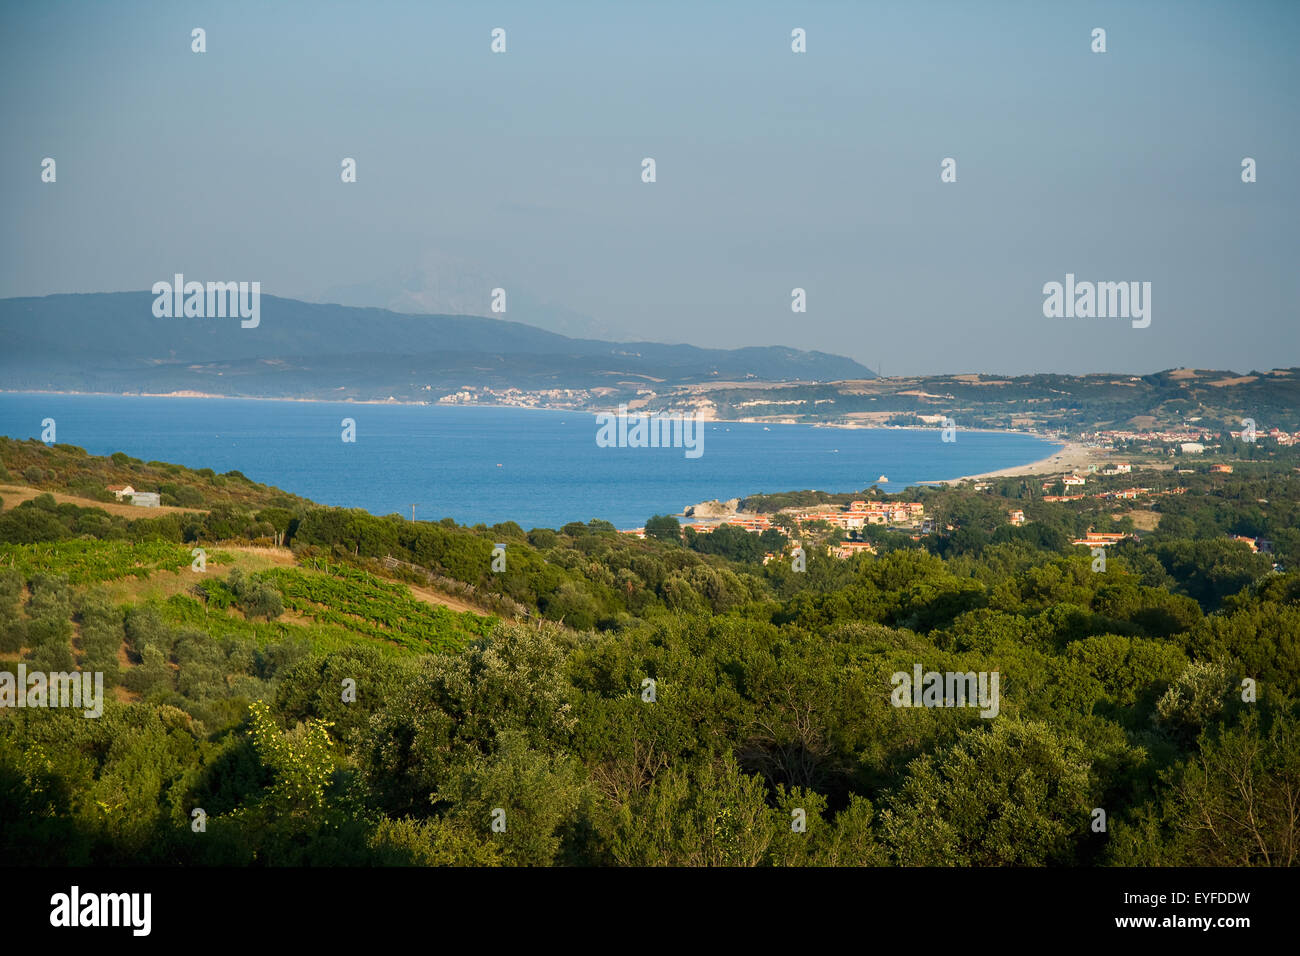 Sea view from hill top; ierissos halkidiki greece Stock Photo